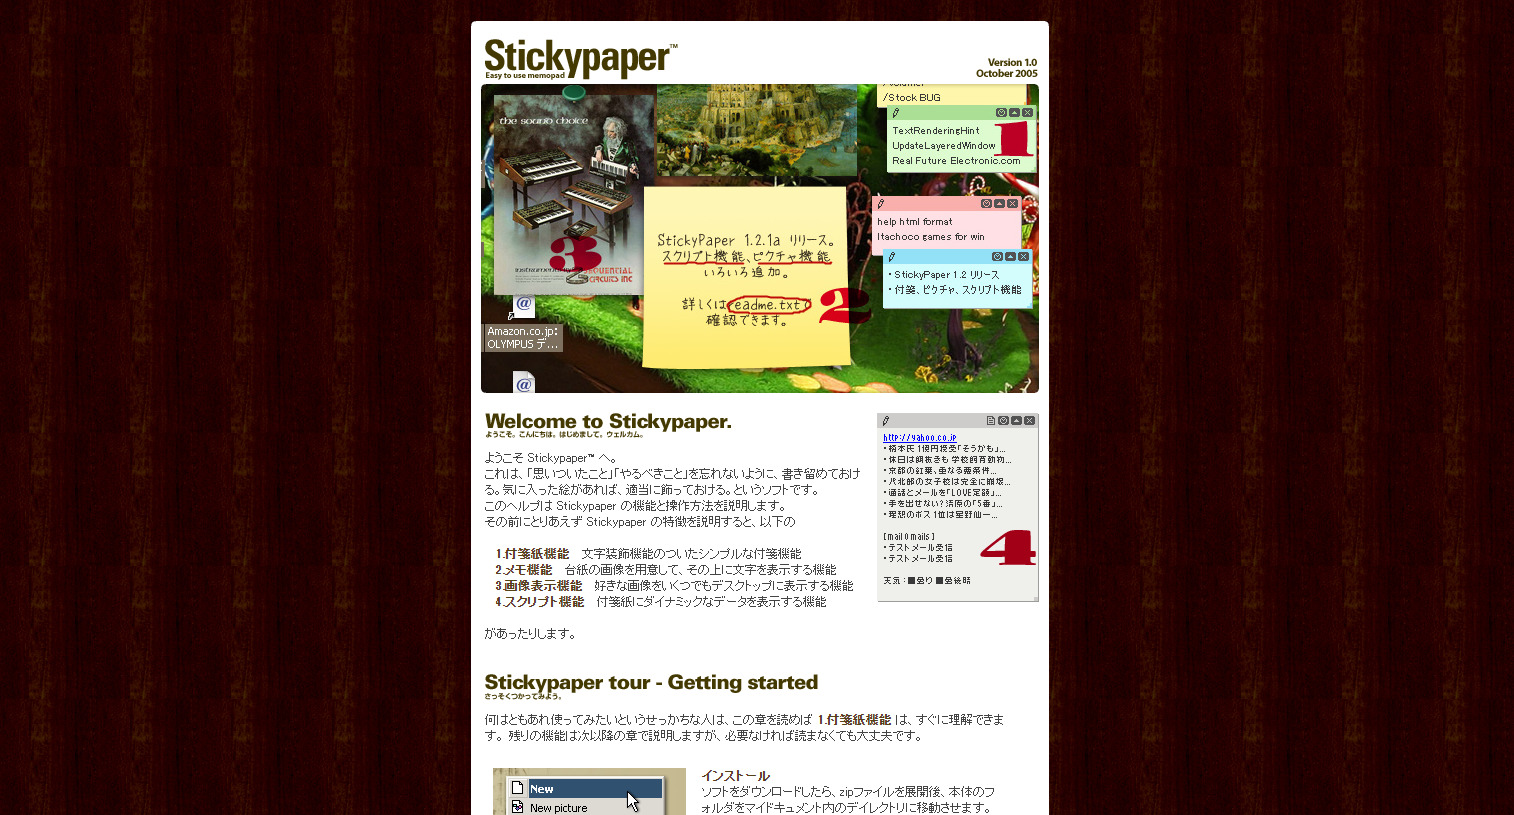 Stickypaperのトップページ画像